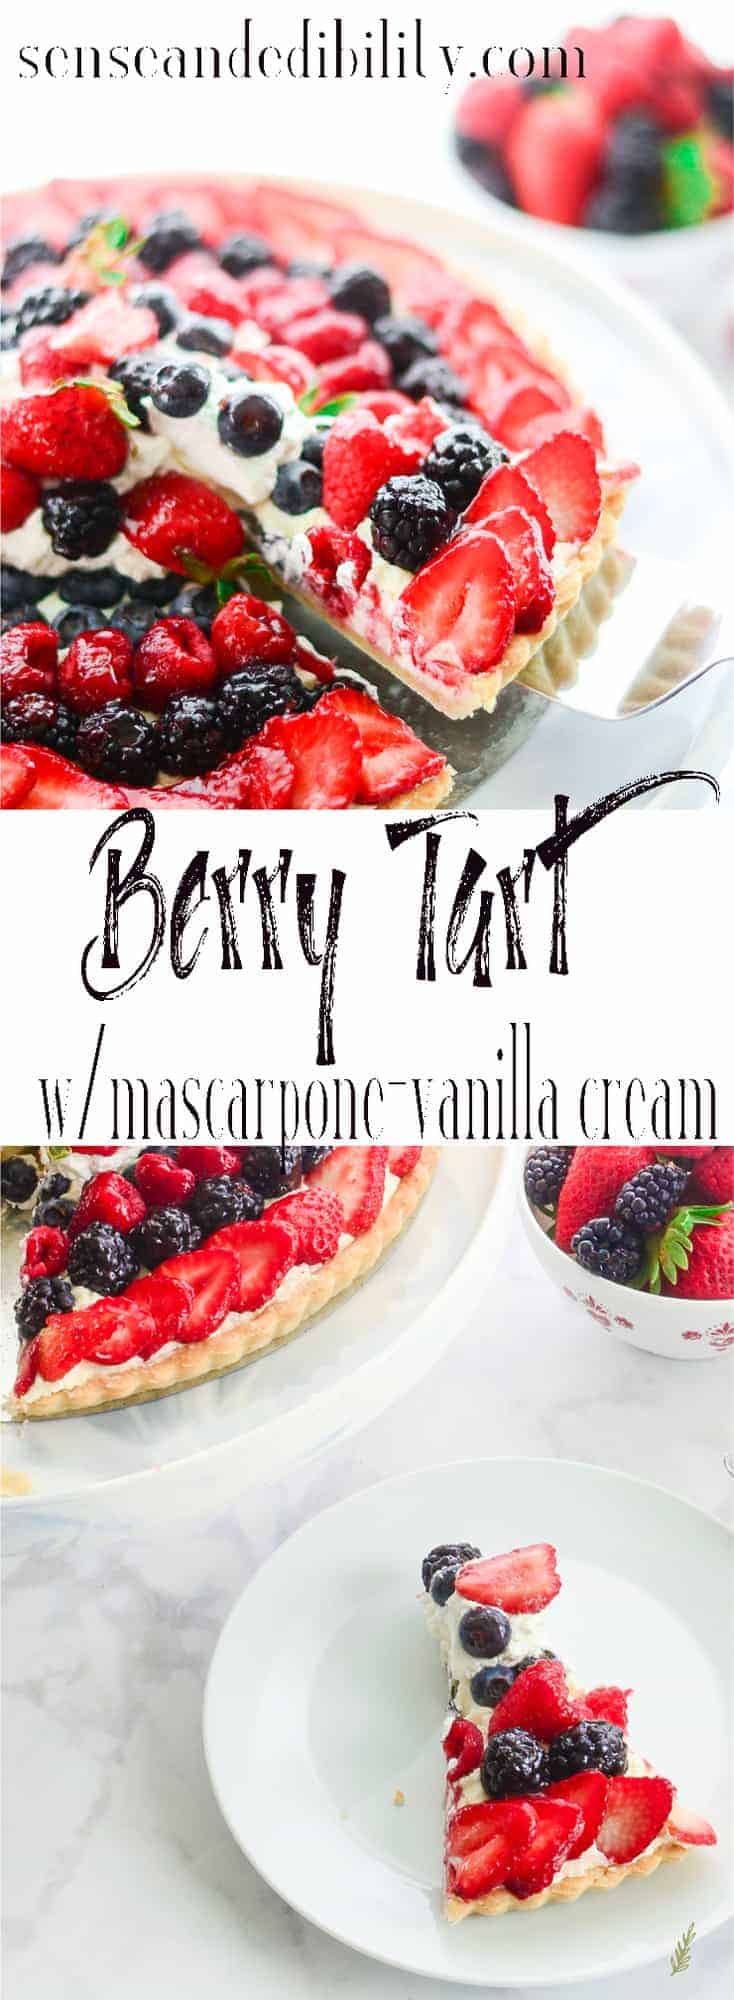 Sense & Edibility's Mascarpone-Vanilla Berry Tart Pin